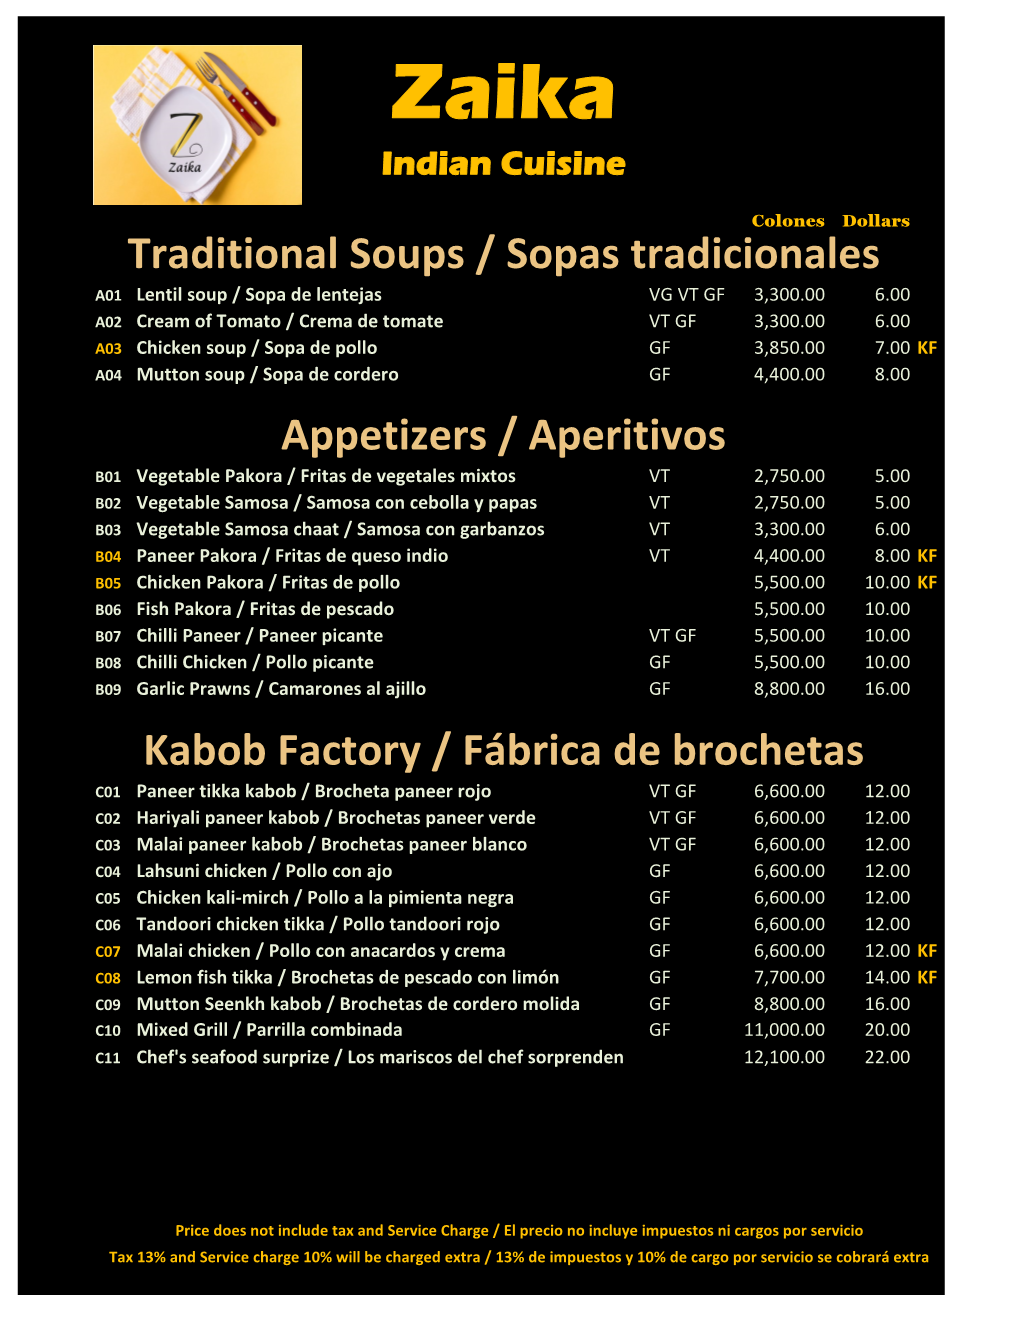 Appetizers / Aperitivos Traditional Soups / Sopas Tradicionales Kabob